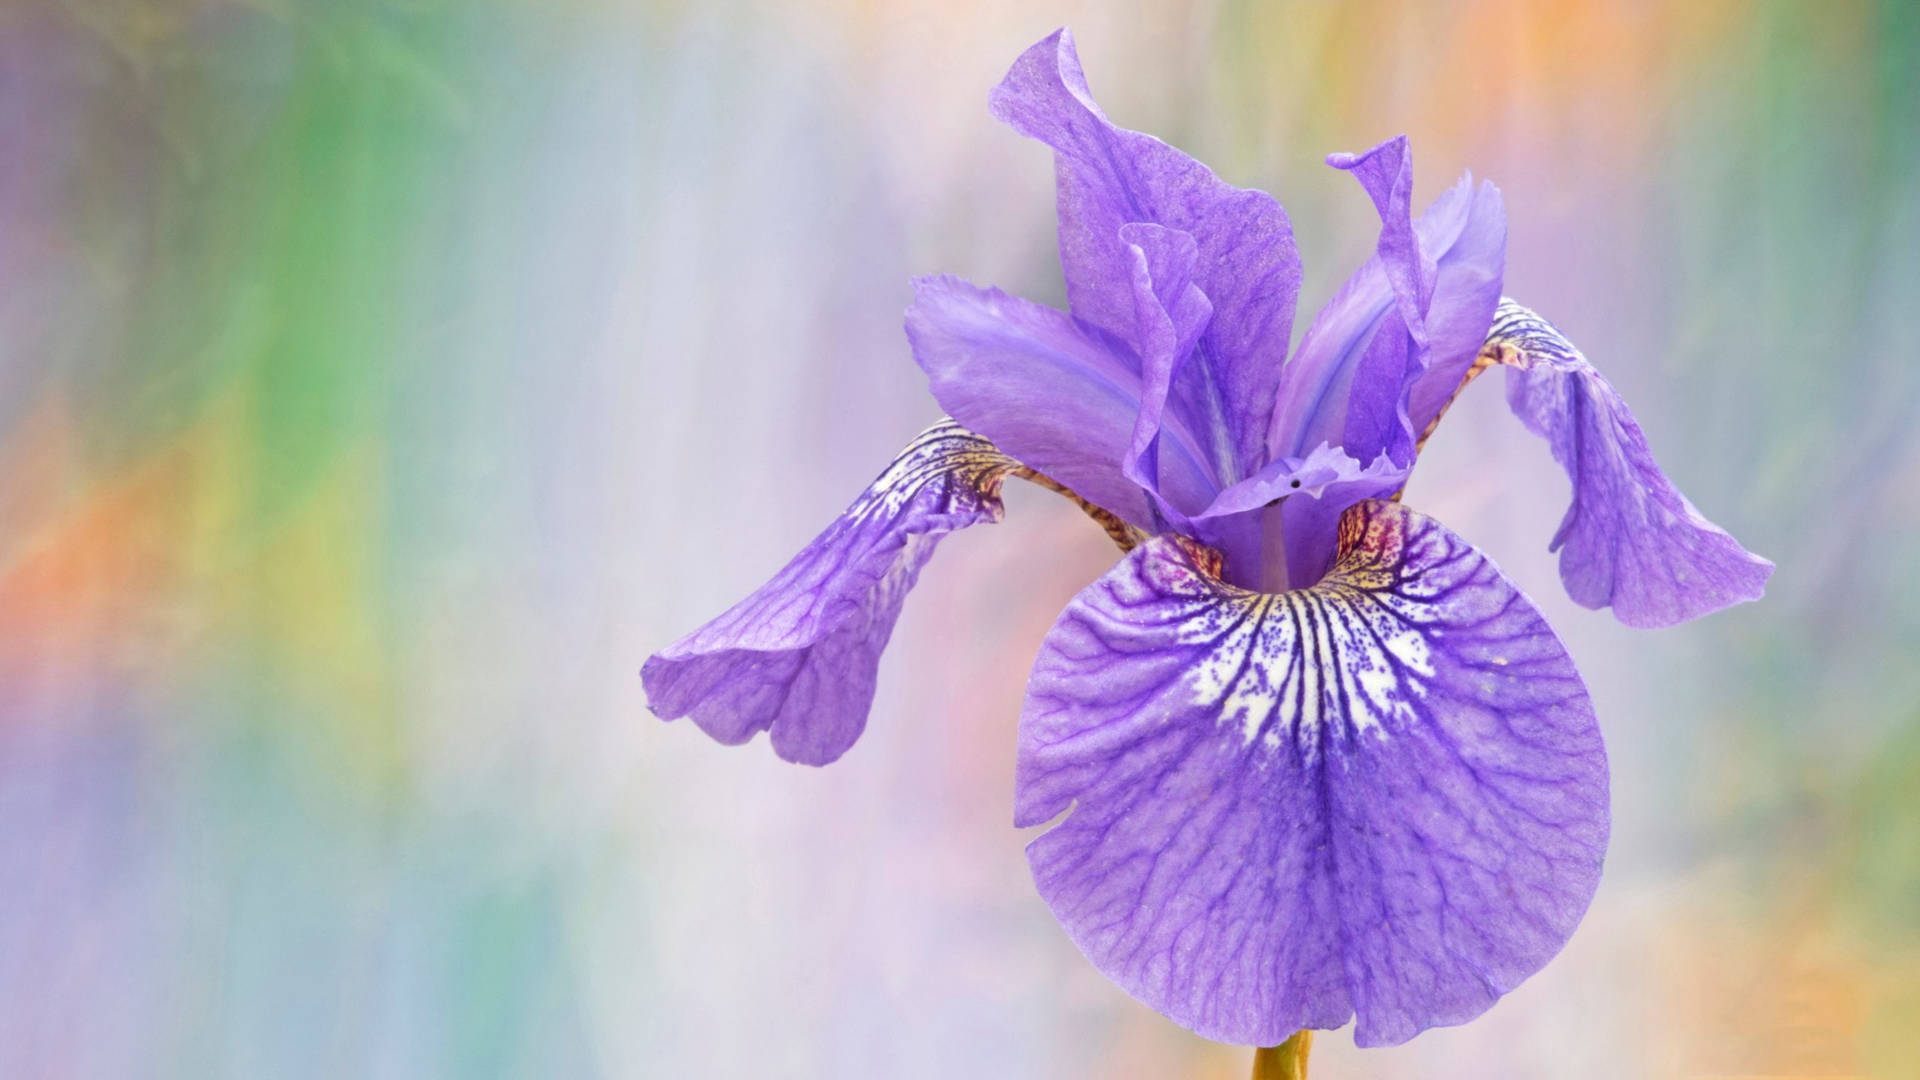 Caption: Vibrant Blooming Siberian Iris Flower Background